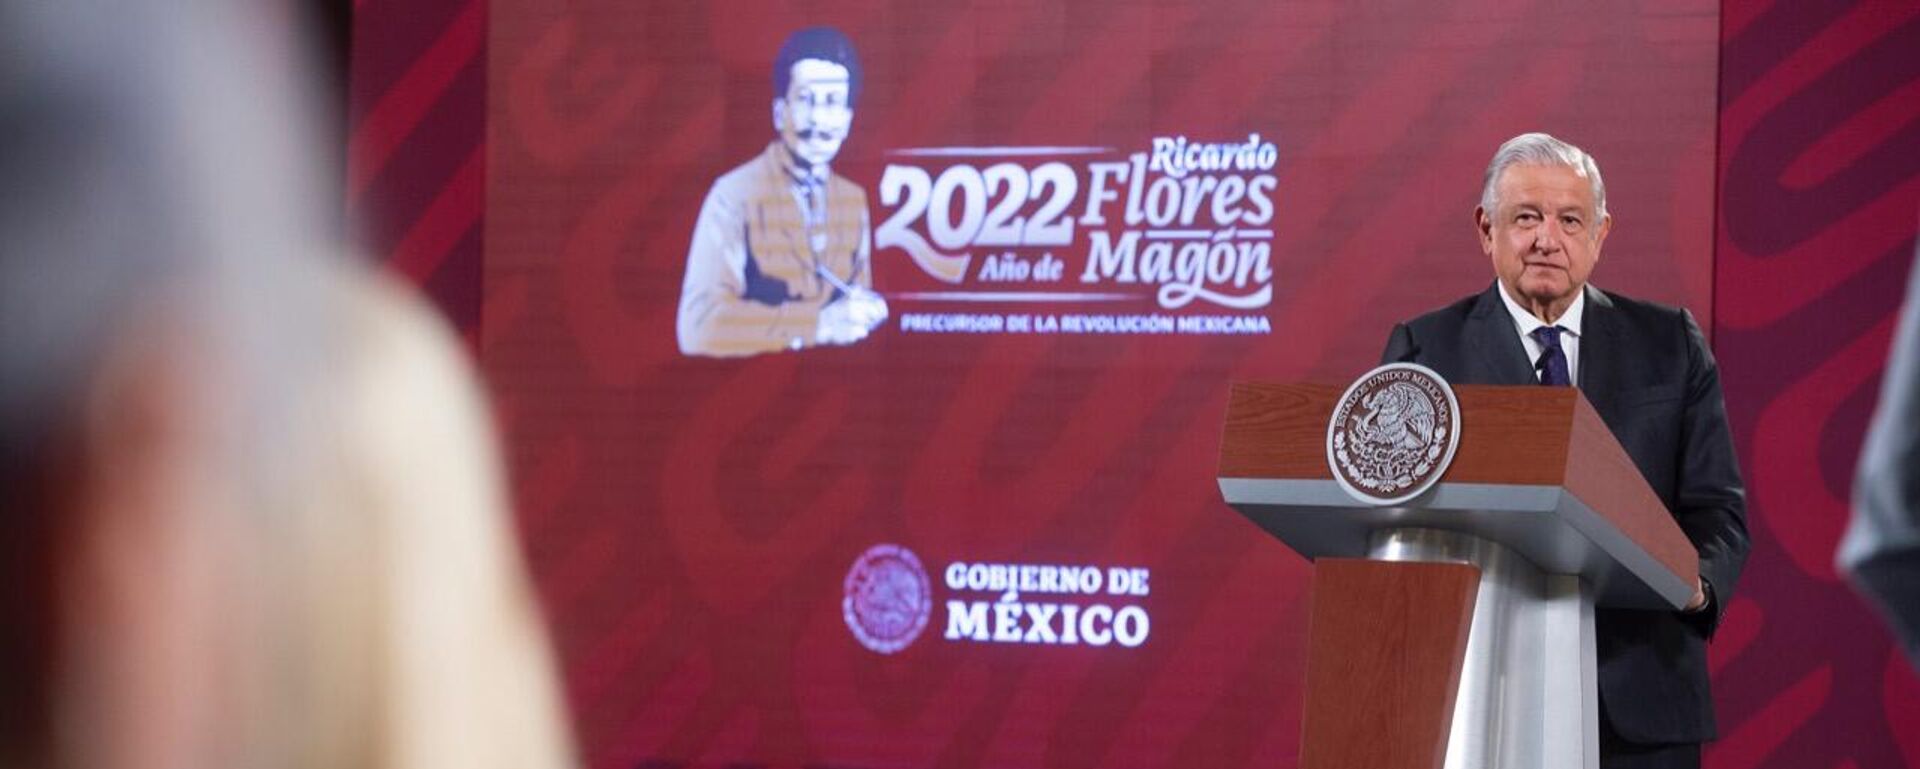 El presidente de México, Andrés Manuel López Obrador - Sputnik Mundo, 1920, 25.03.2022